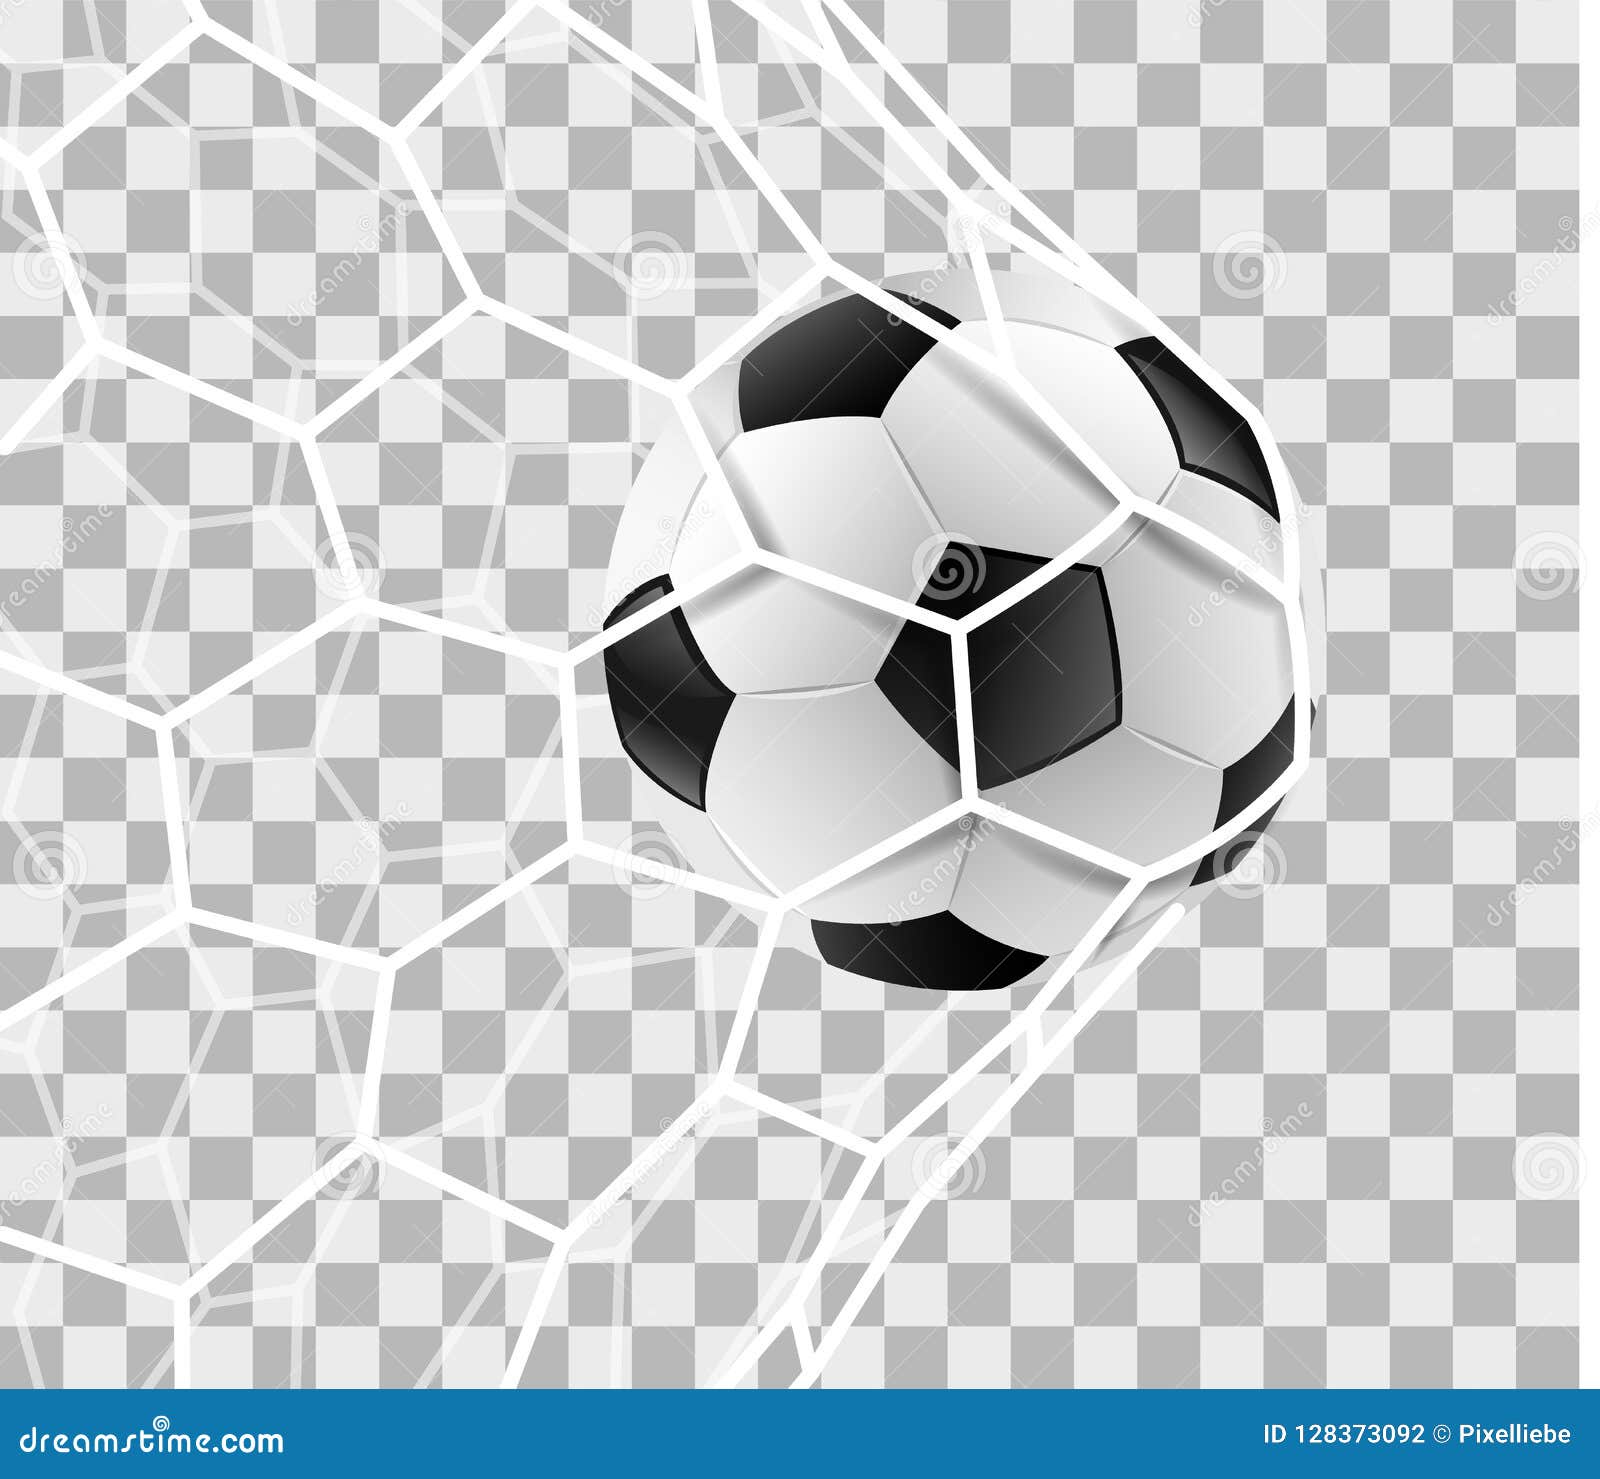 Soccer Ball In A Goal Net Isolated Vector Background Stock Vector Illustration Of Scoring Design